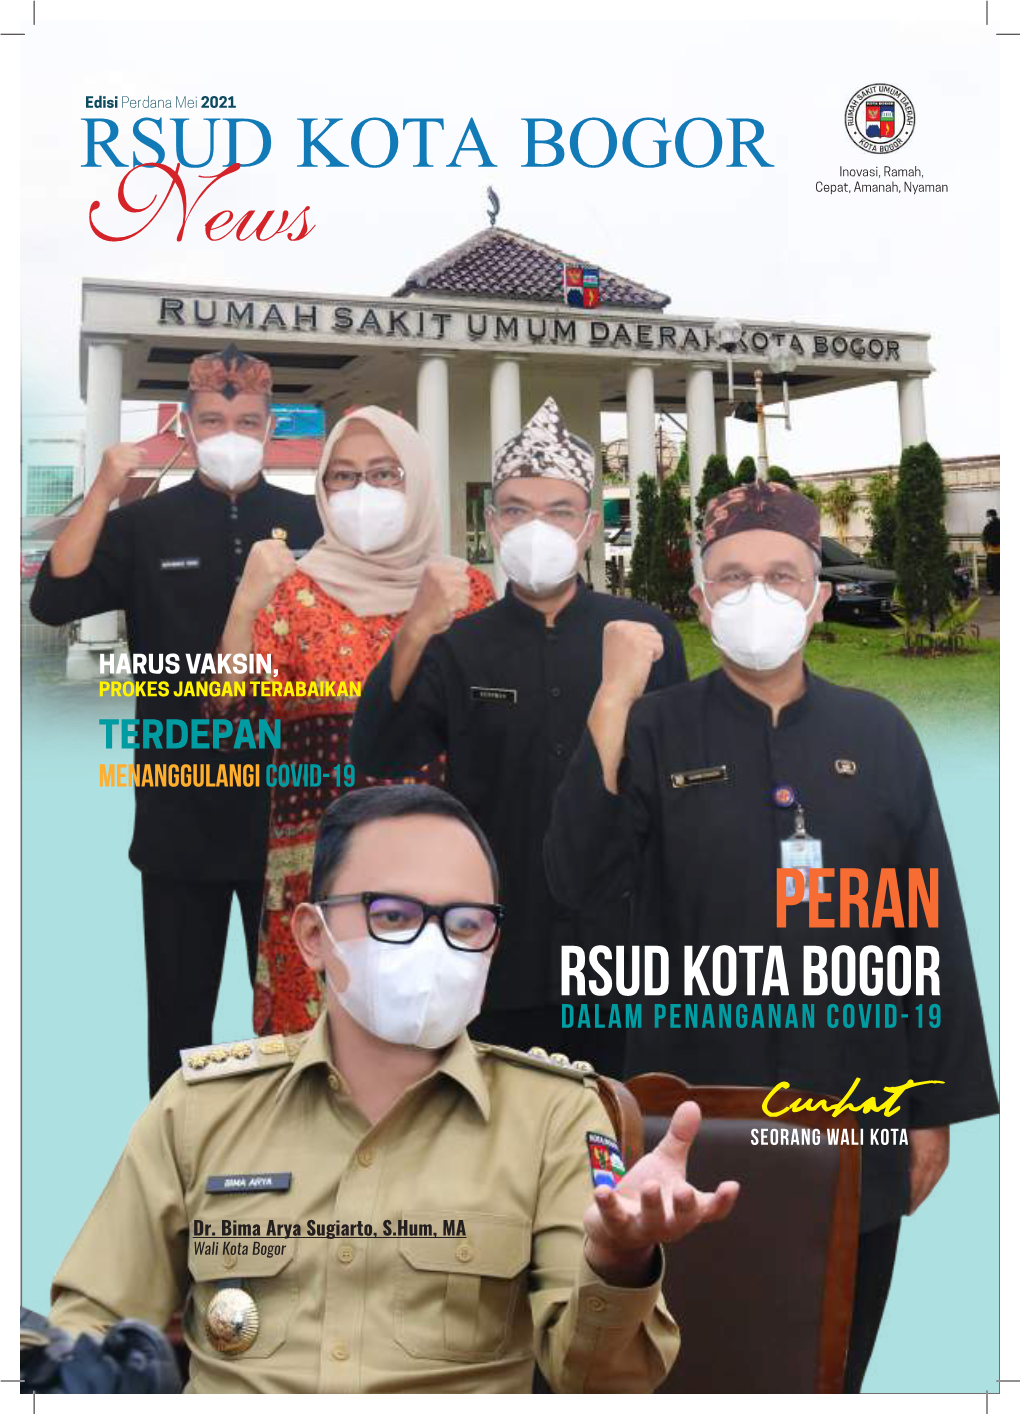 Dr. Bima Arya Sugiarto, S.Hum, MA Wali Kota Bogor JADWAL PRAKTEK